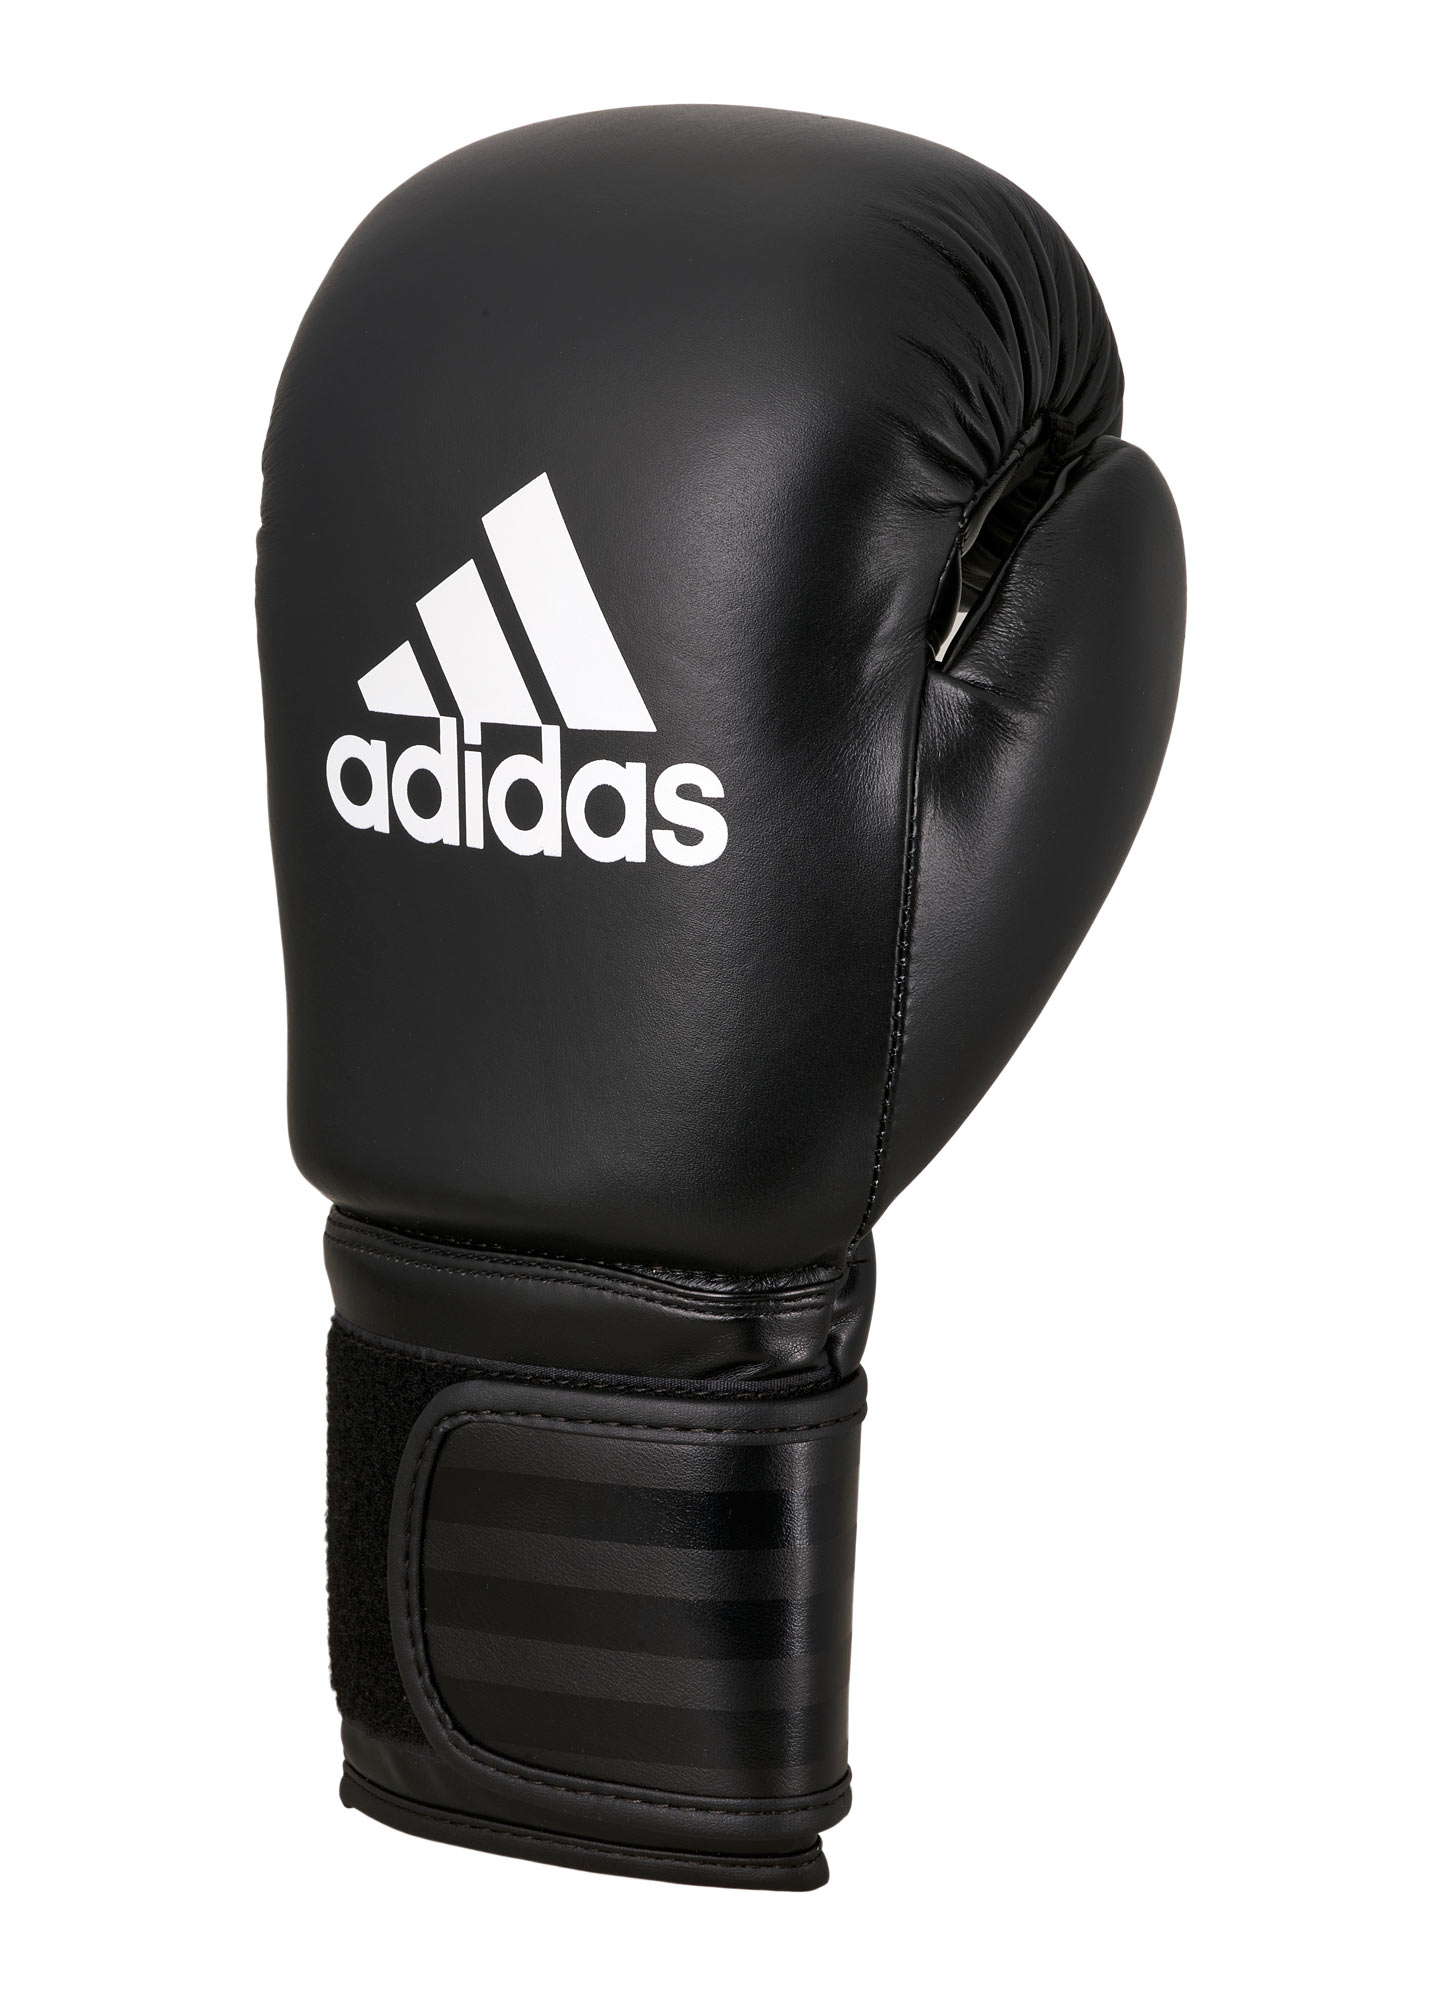 Adidas | Performer KAMPFHELDEN ADIBC01 Boxhandschuhe schwarz